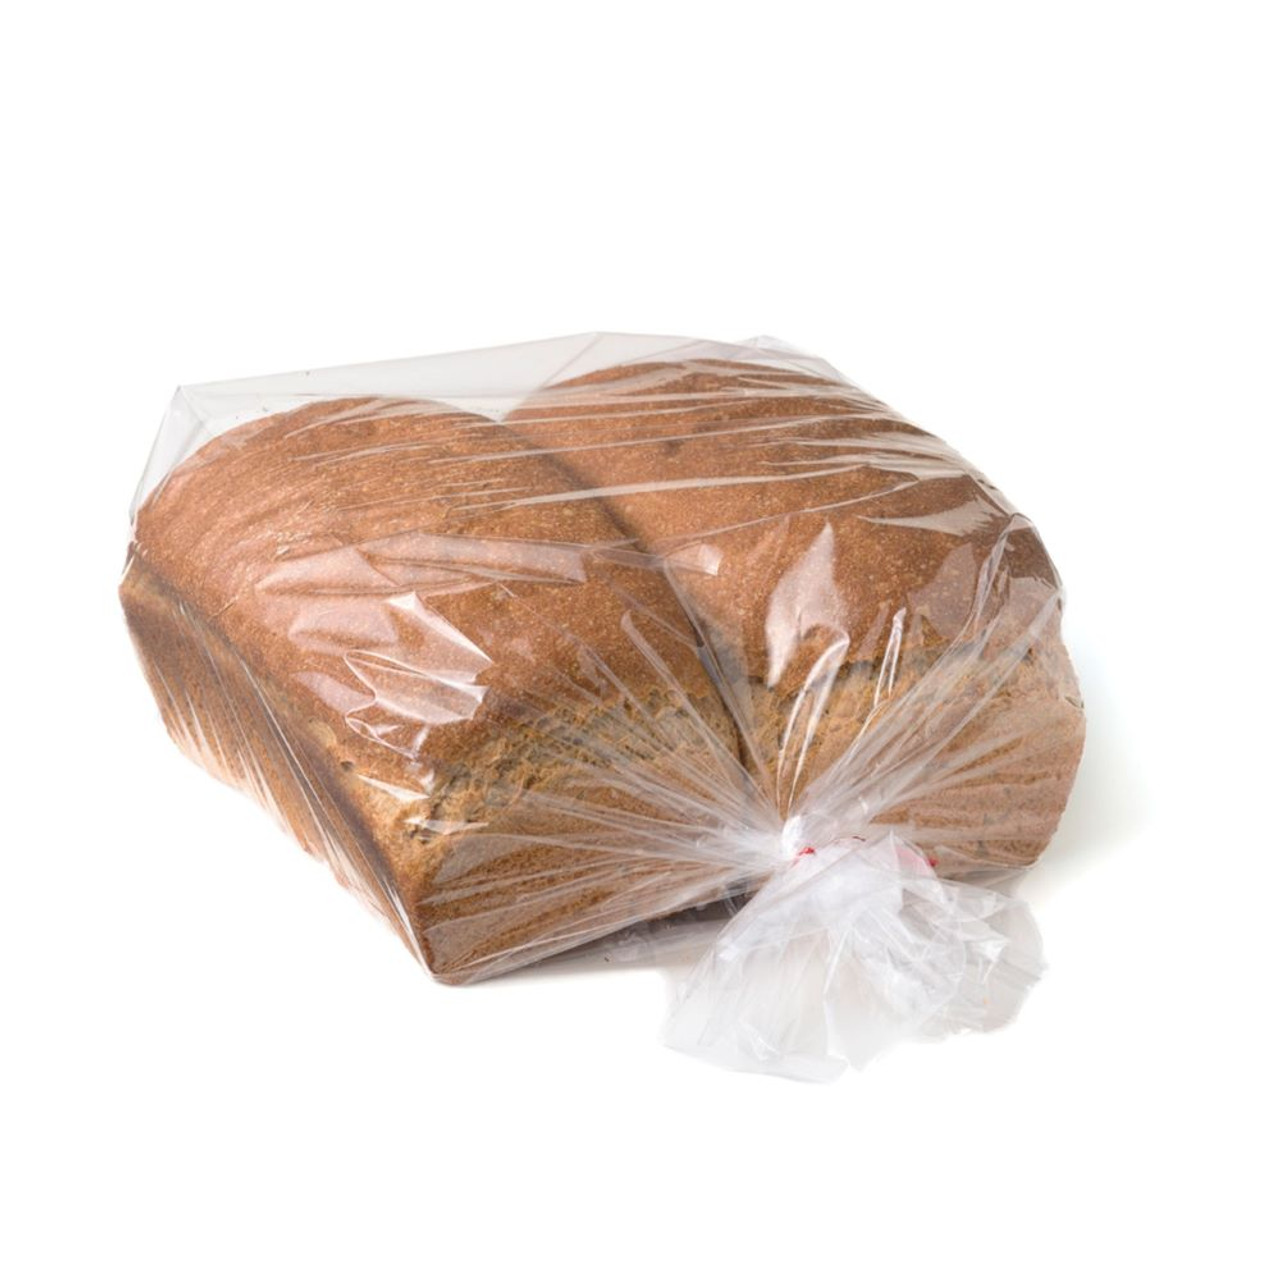 Bread Bags, 2 Pcs 11.8x17.7 and 2 Pcs 5.9x27.5 Bread Storage Bags